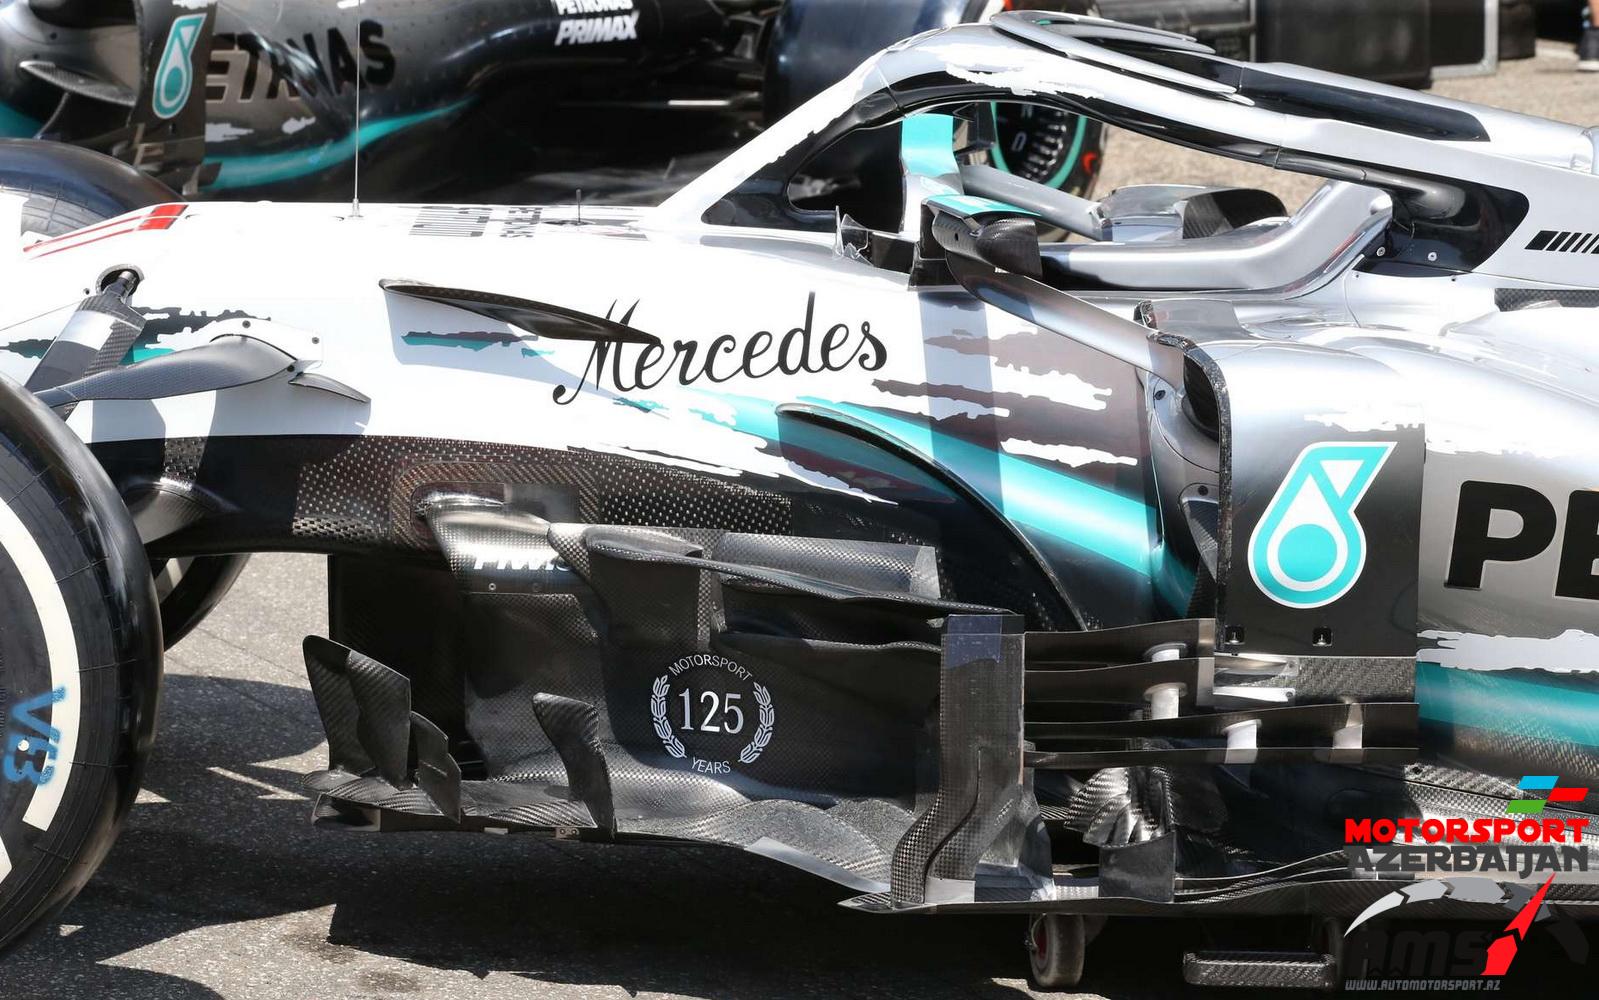 Mercedes AMG celebrates 125 years of motorsport